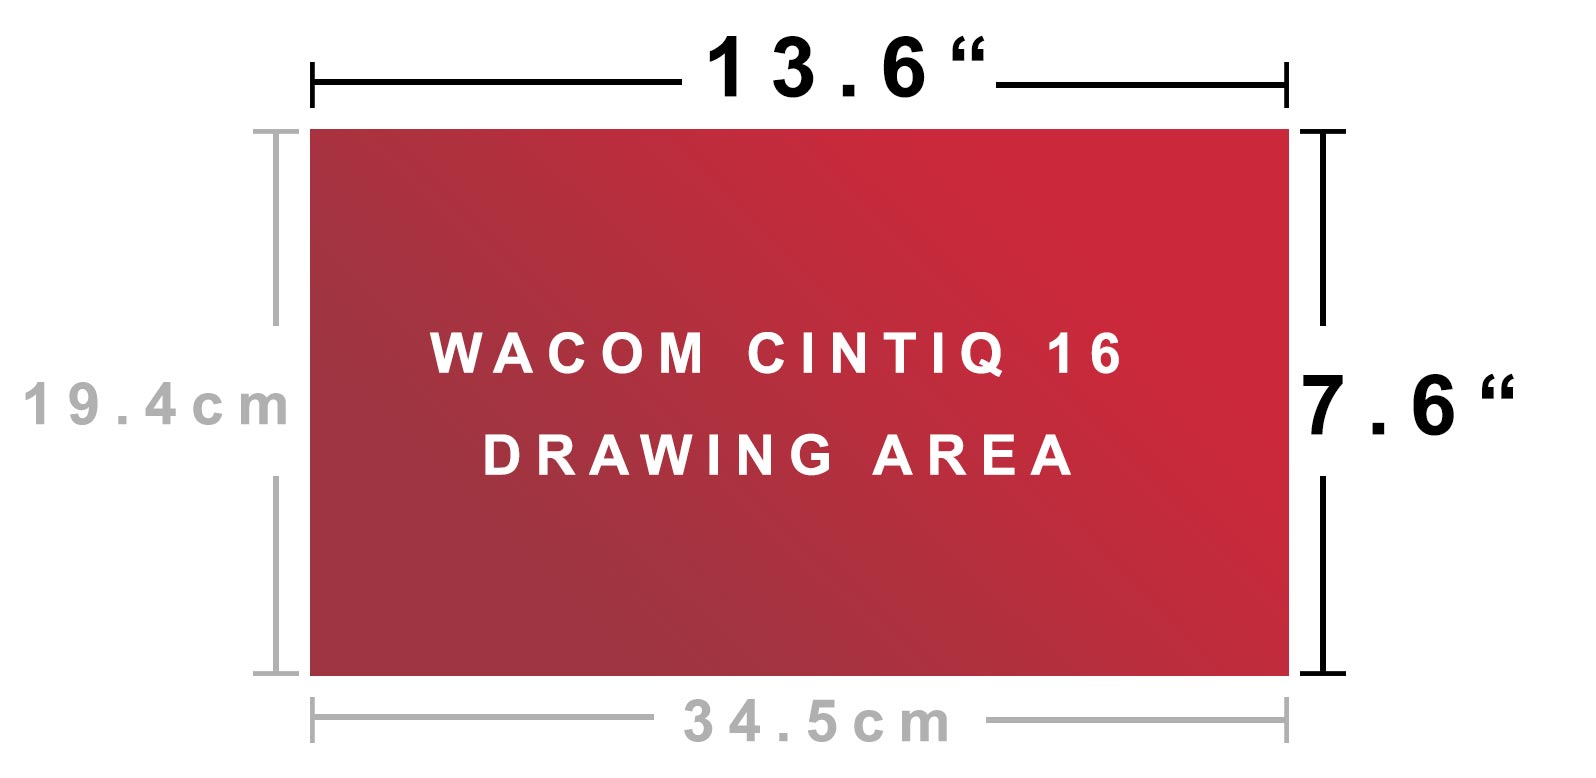 Wacom Cintiq 16 screen size measurement